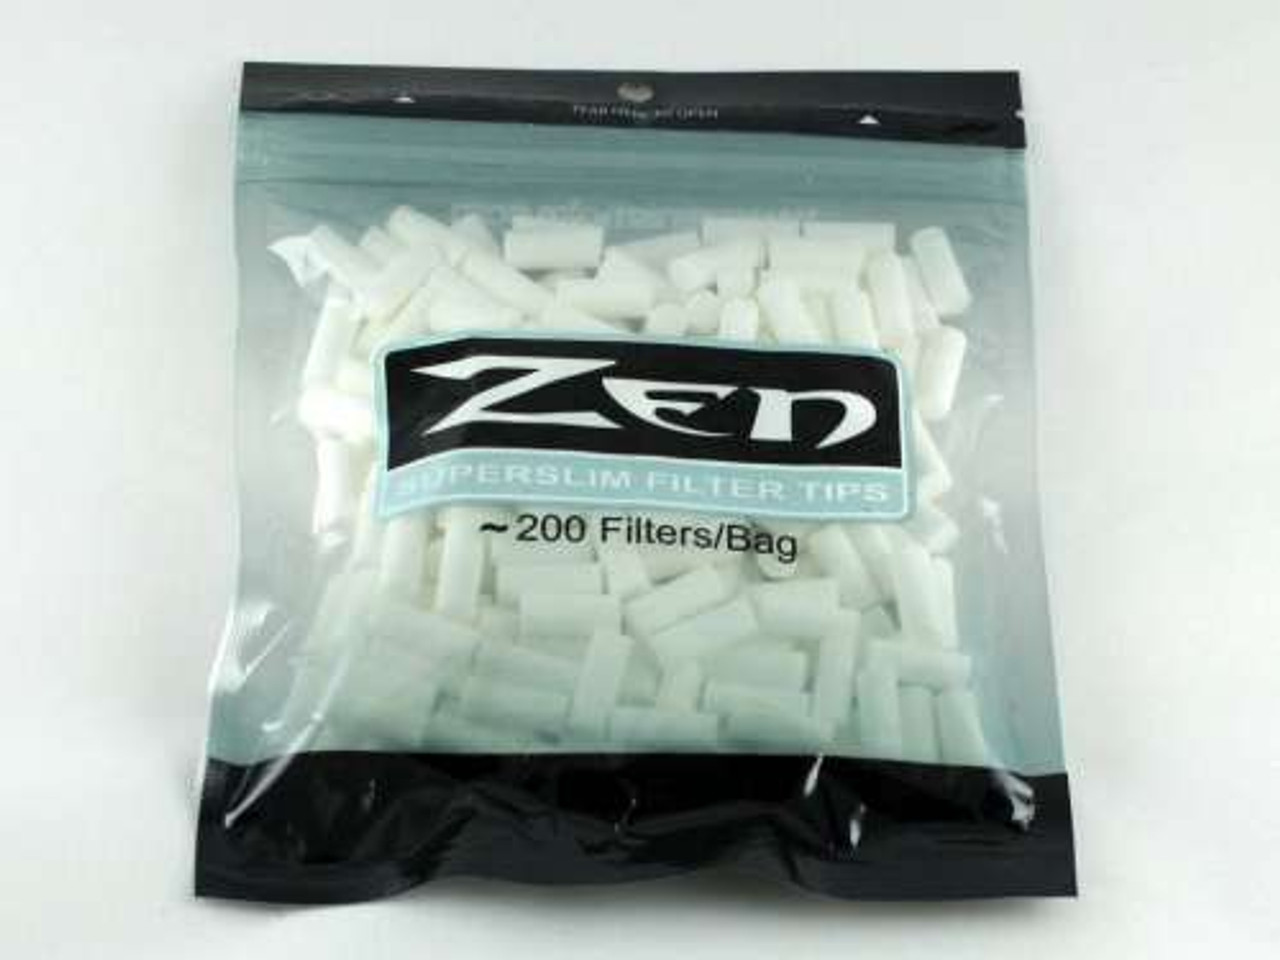 Flavorme Superslim Filter Tips Menthol 1 Packung à 100 Feinfilter 5 mm 